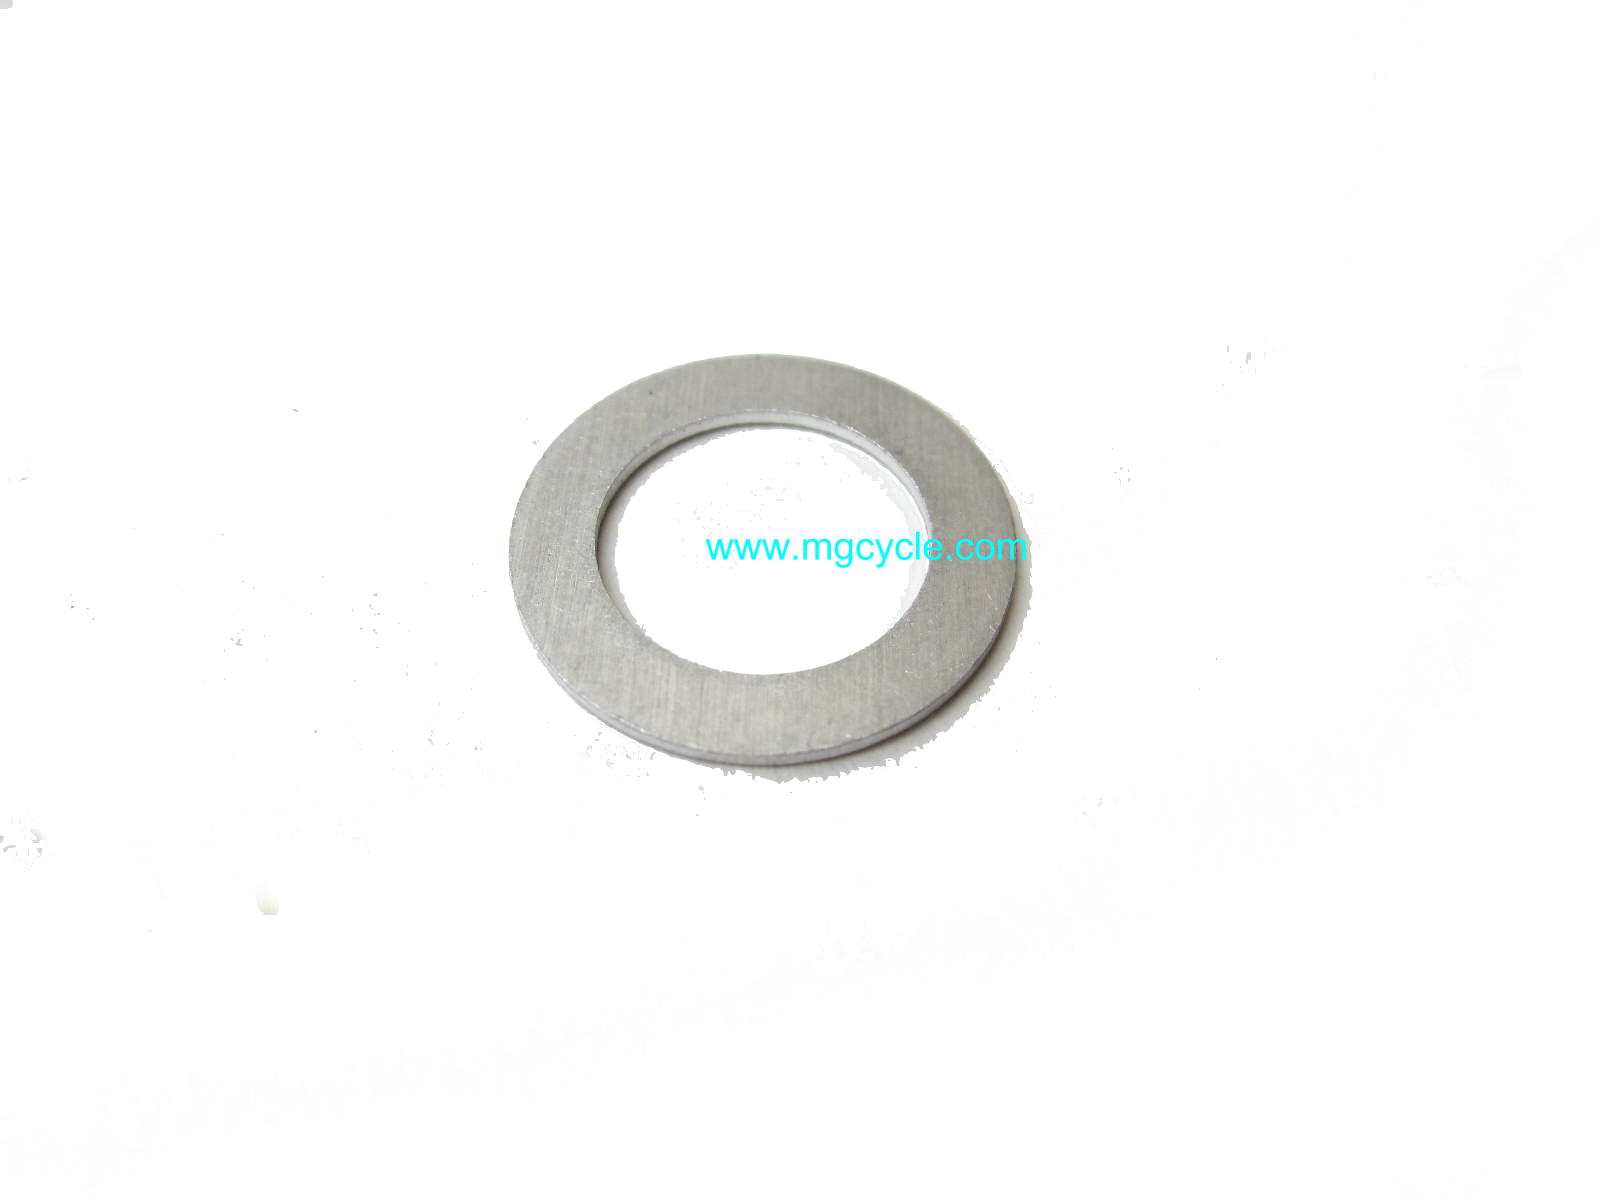 14.5mm ID crush washerV7 series, Convert, V11 fuel filter nipple - Click Image to Close